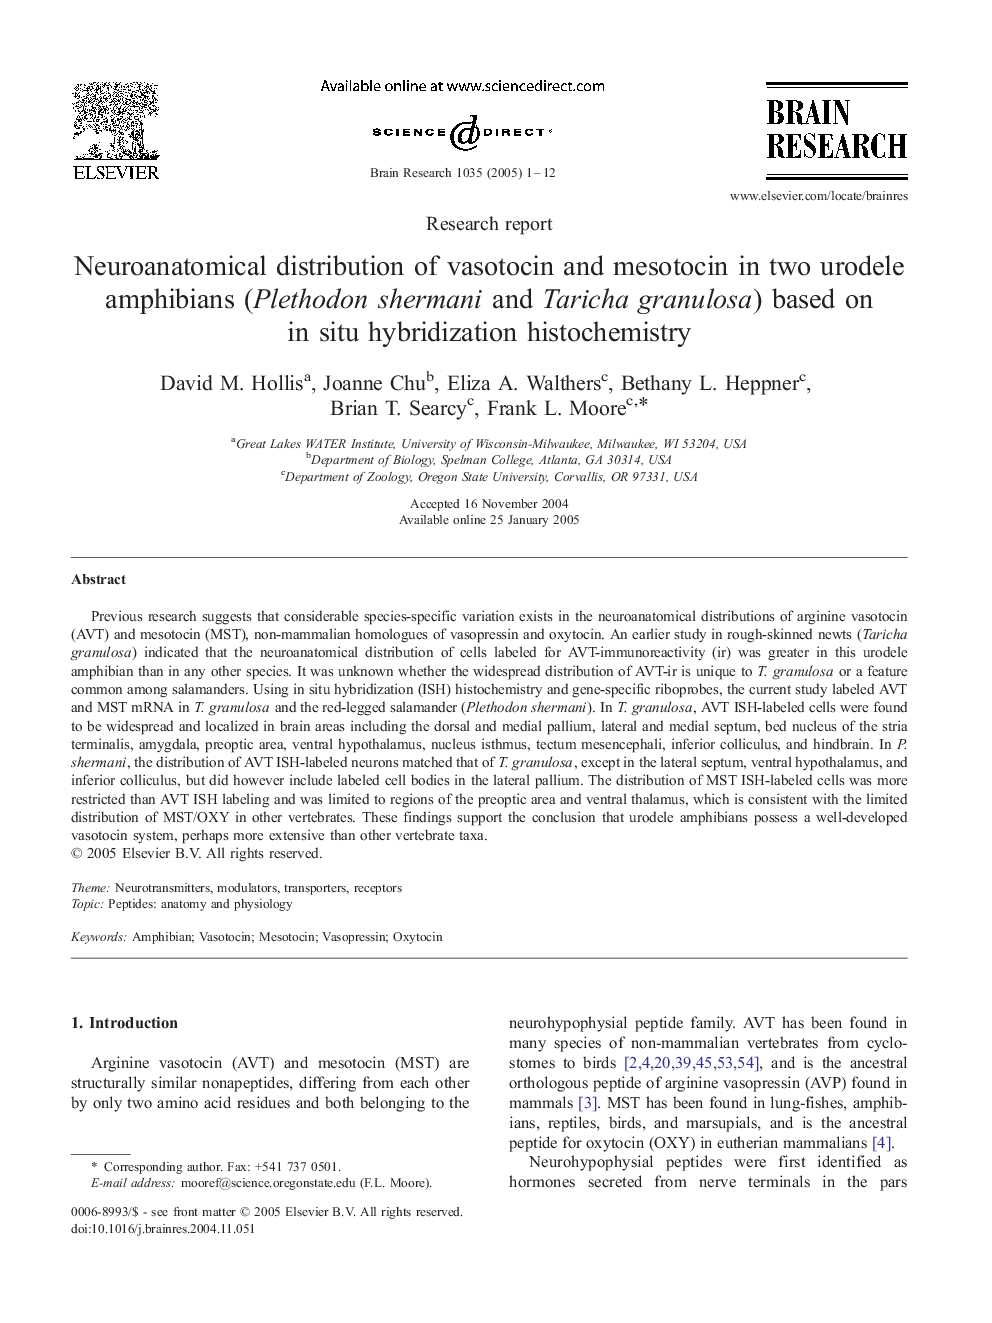 Neuroanatomical distribution of vasotocin and mesotocin in two urodele amphibians (Plethodon shermani and Taricha granulosa) based on in situ hybridization histochemistry